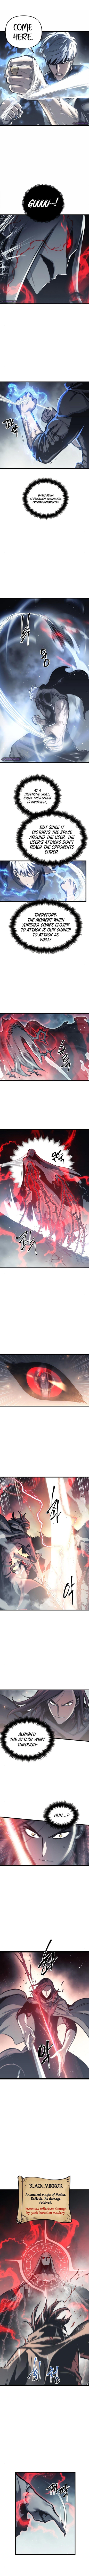 Reincarnation Of The Suicidal Battle God Chapter 28 page 2 - Mangakakalot